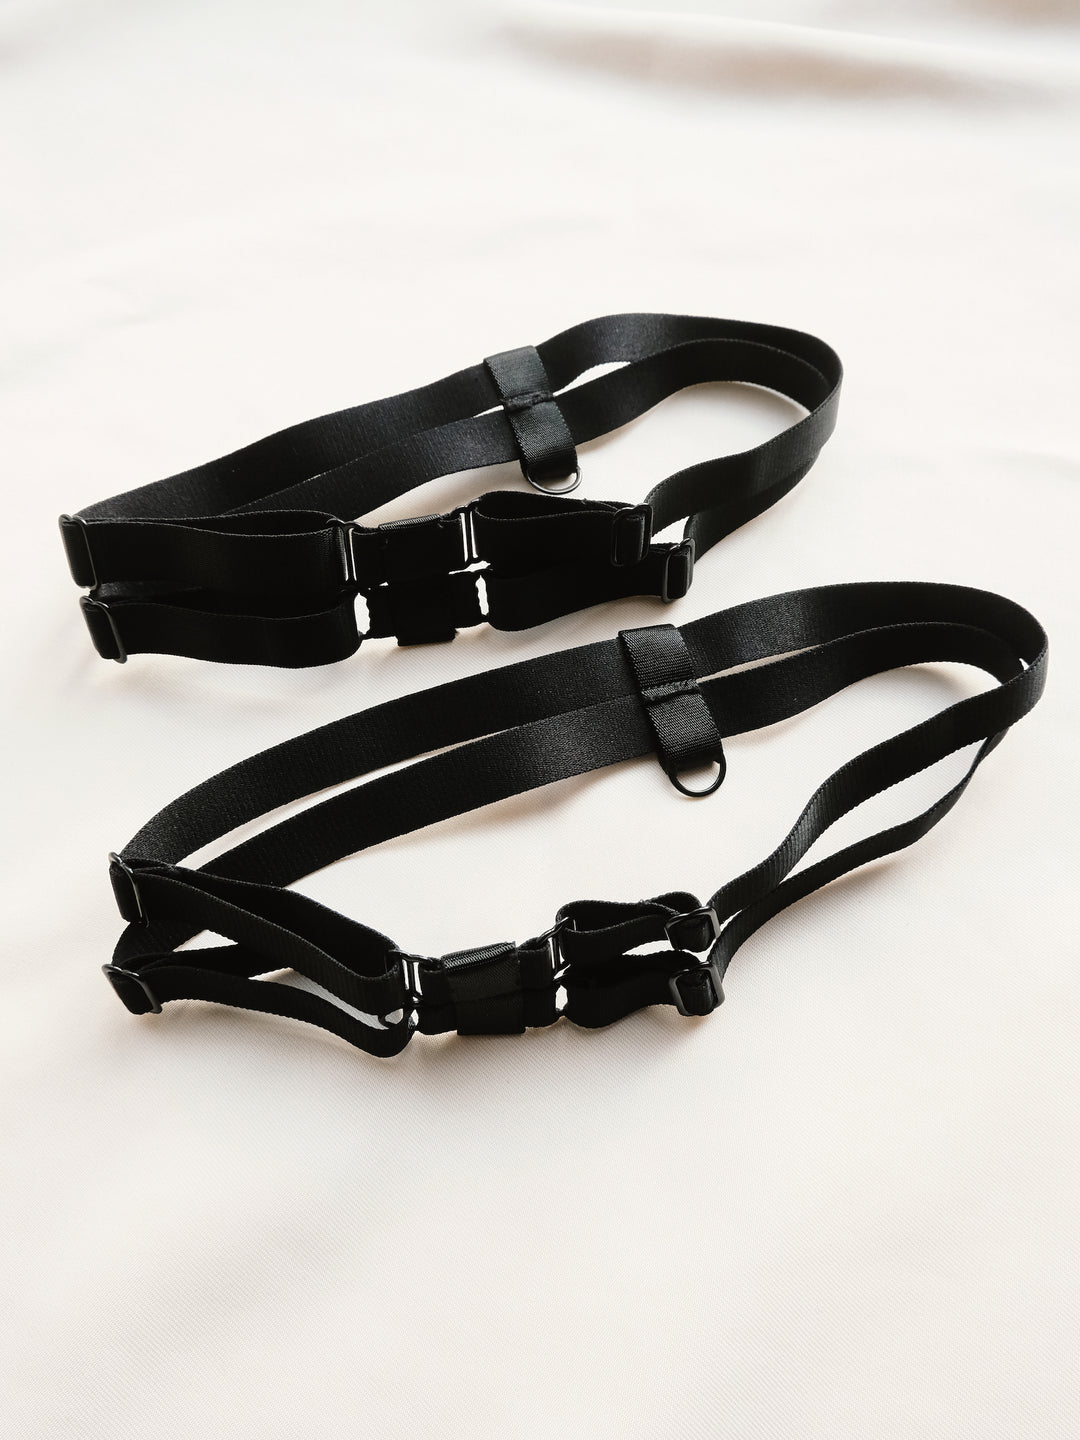 Black adjustable garters